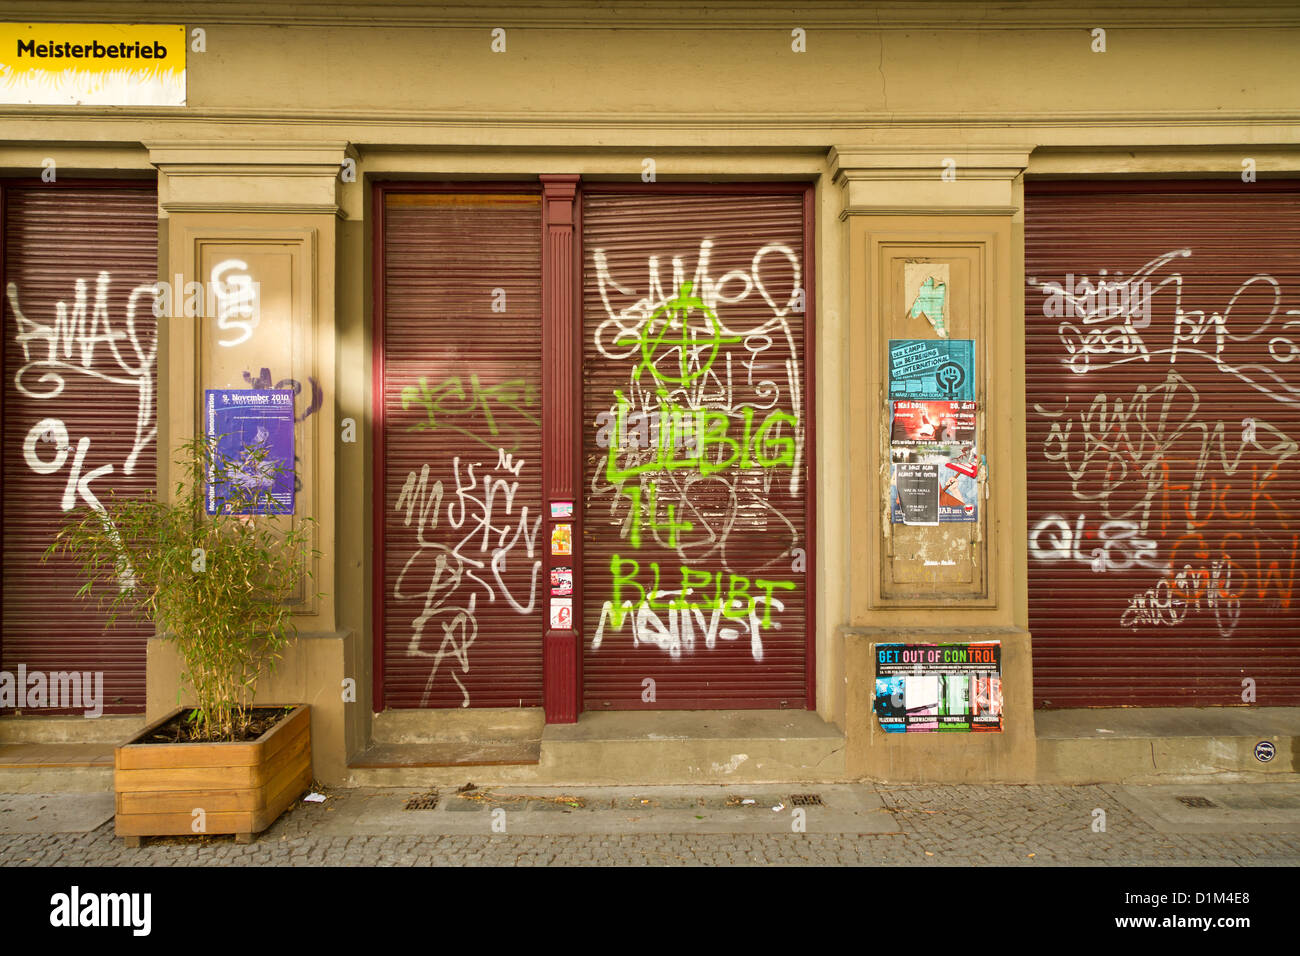 Graffiti on a Frontdoor in Berlin Kreuzberg, Germany Stock Photo